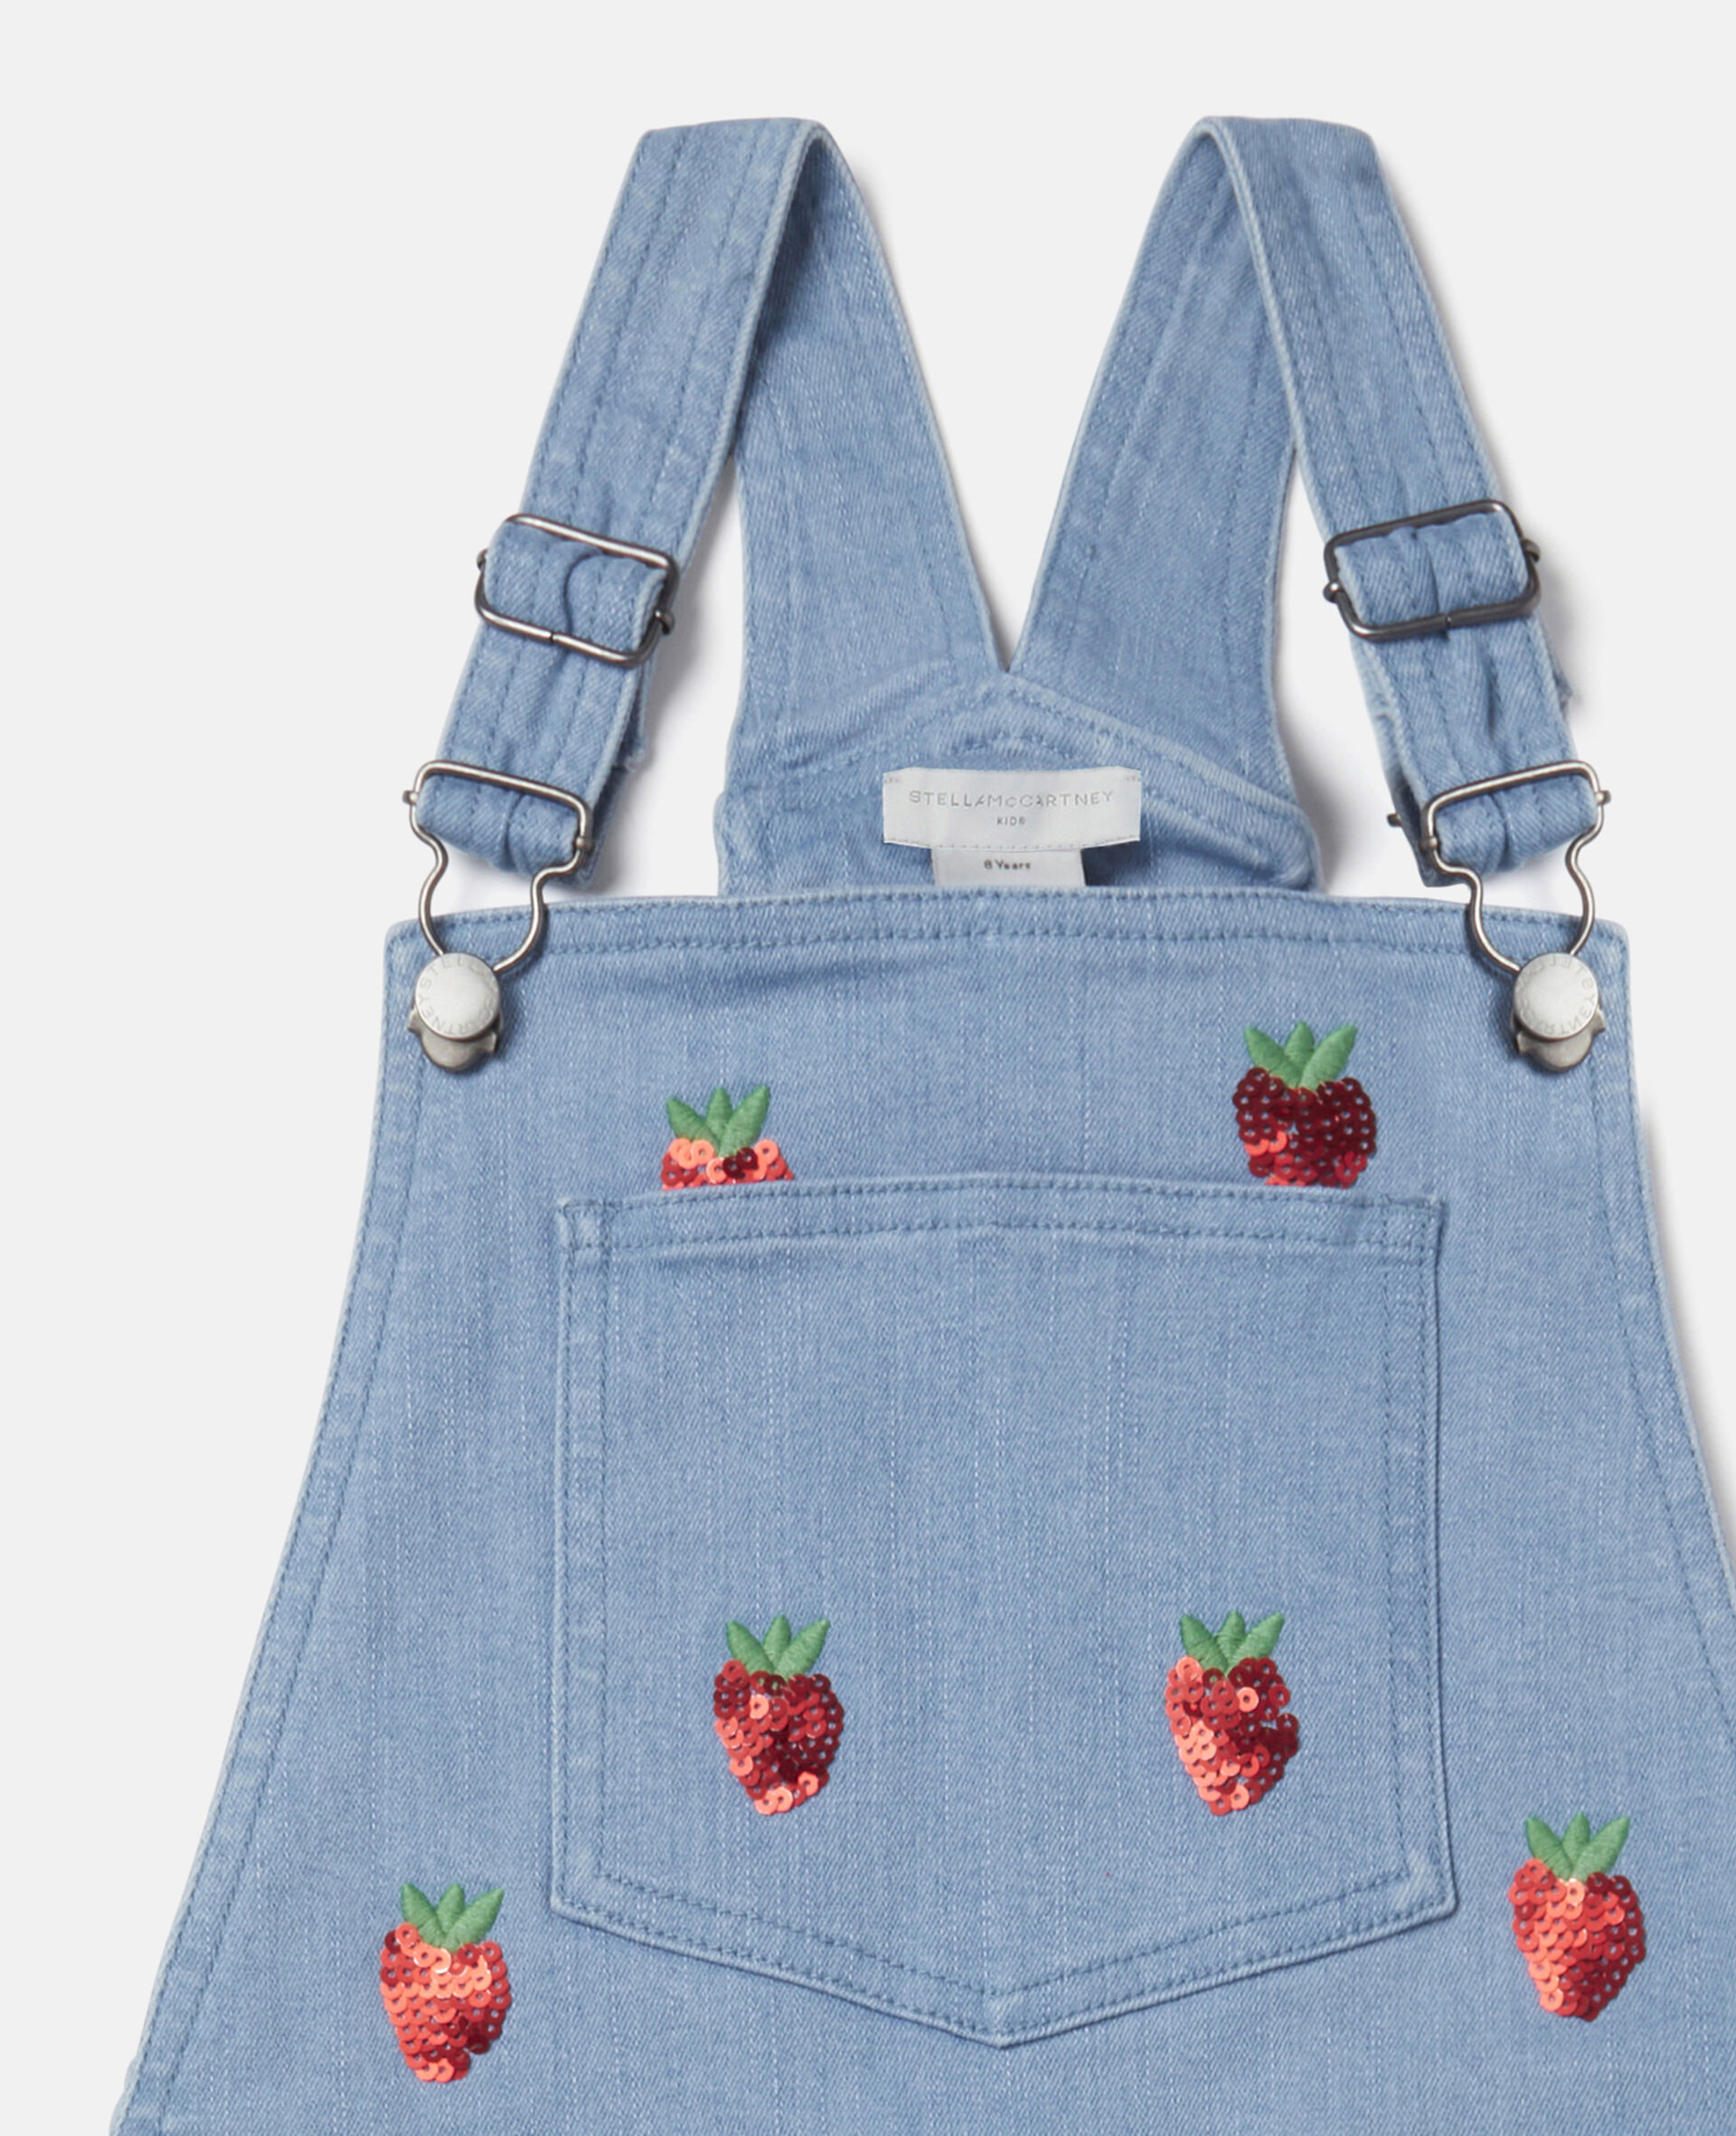 Embroidered Strawberry Denim Overalls-Blue-large image number 1